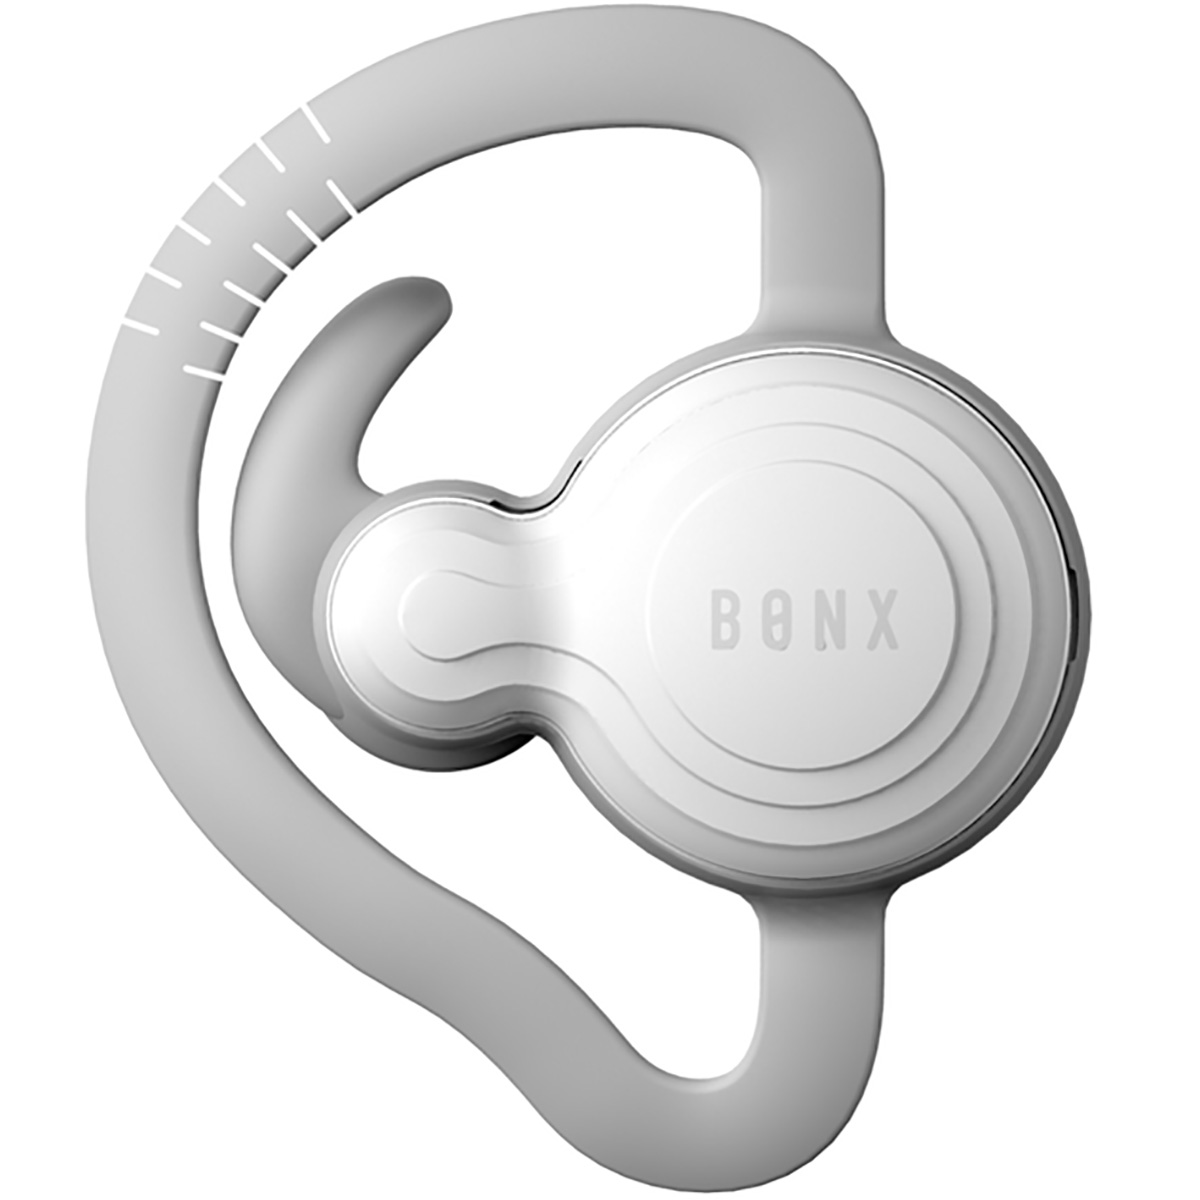  BONX Grip 1個入りパッケージ 